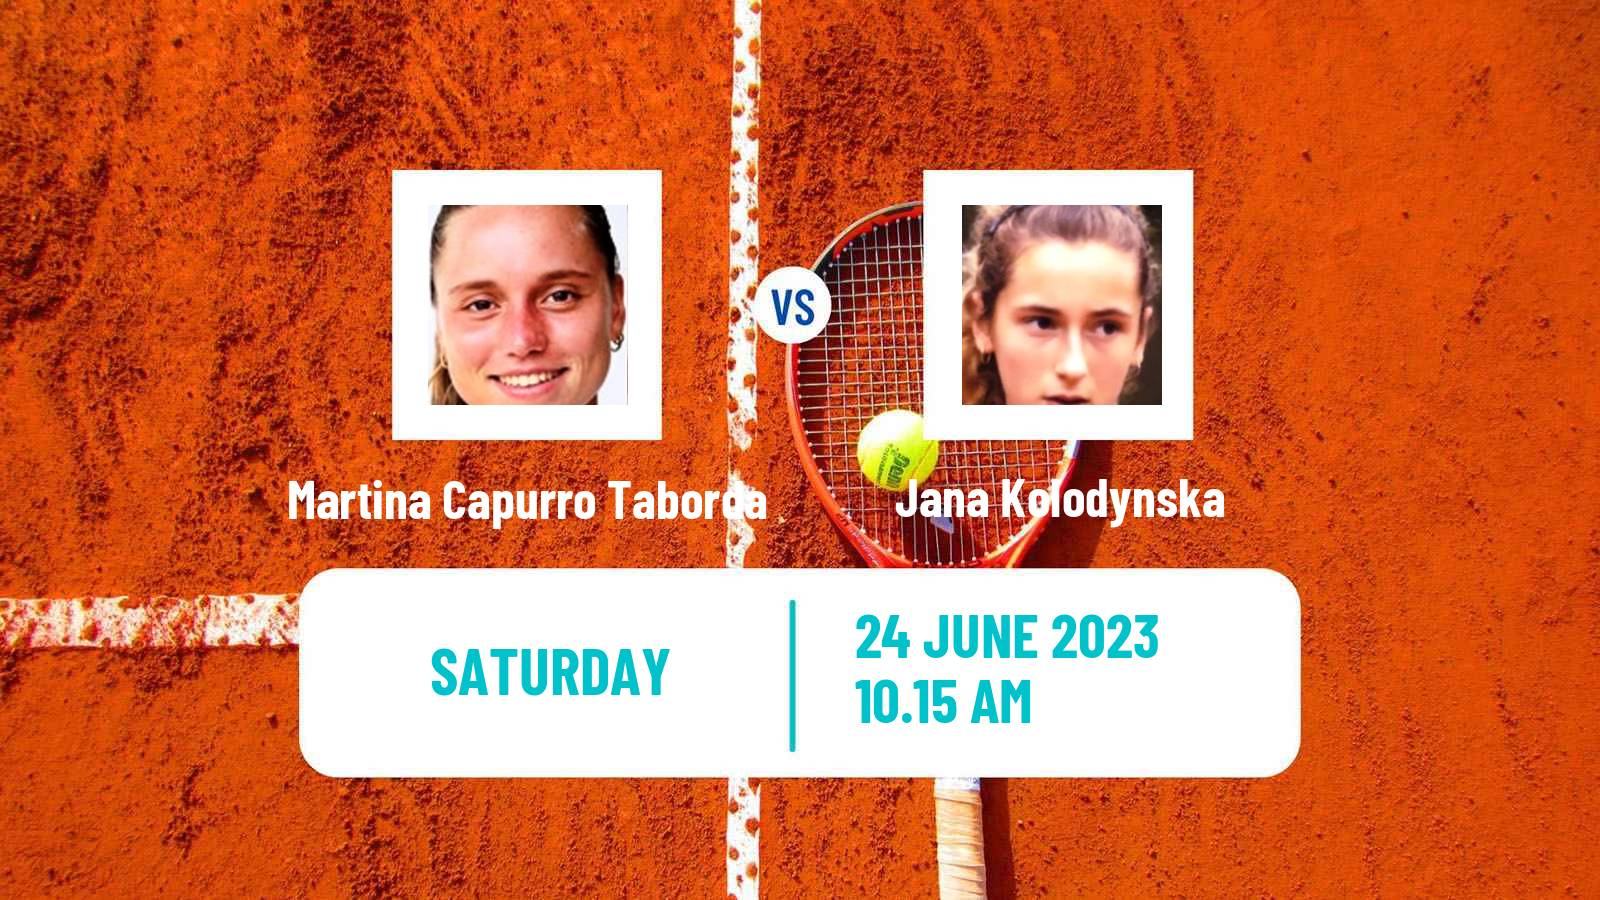 Tennis ITF W25 Santo Domingo 3 Women Martina Capurro Taborda - Jana Kolodynska